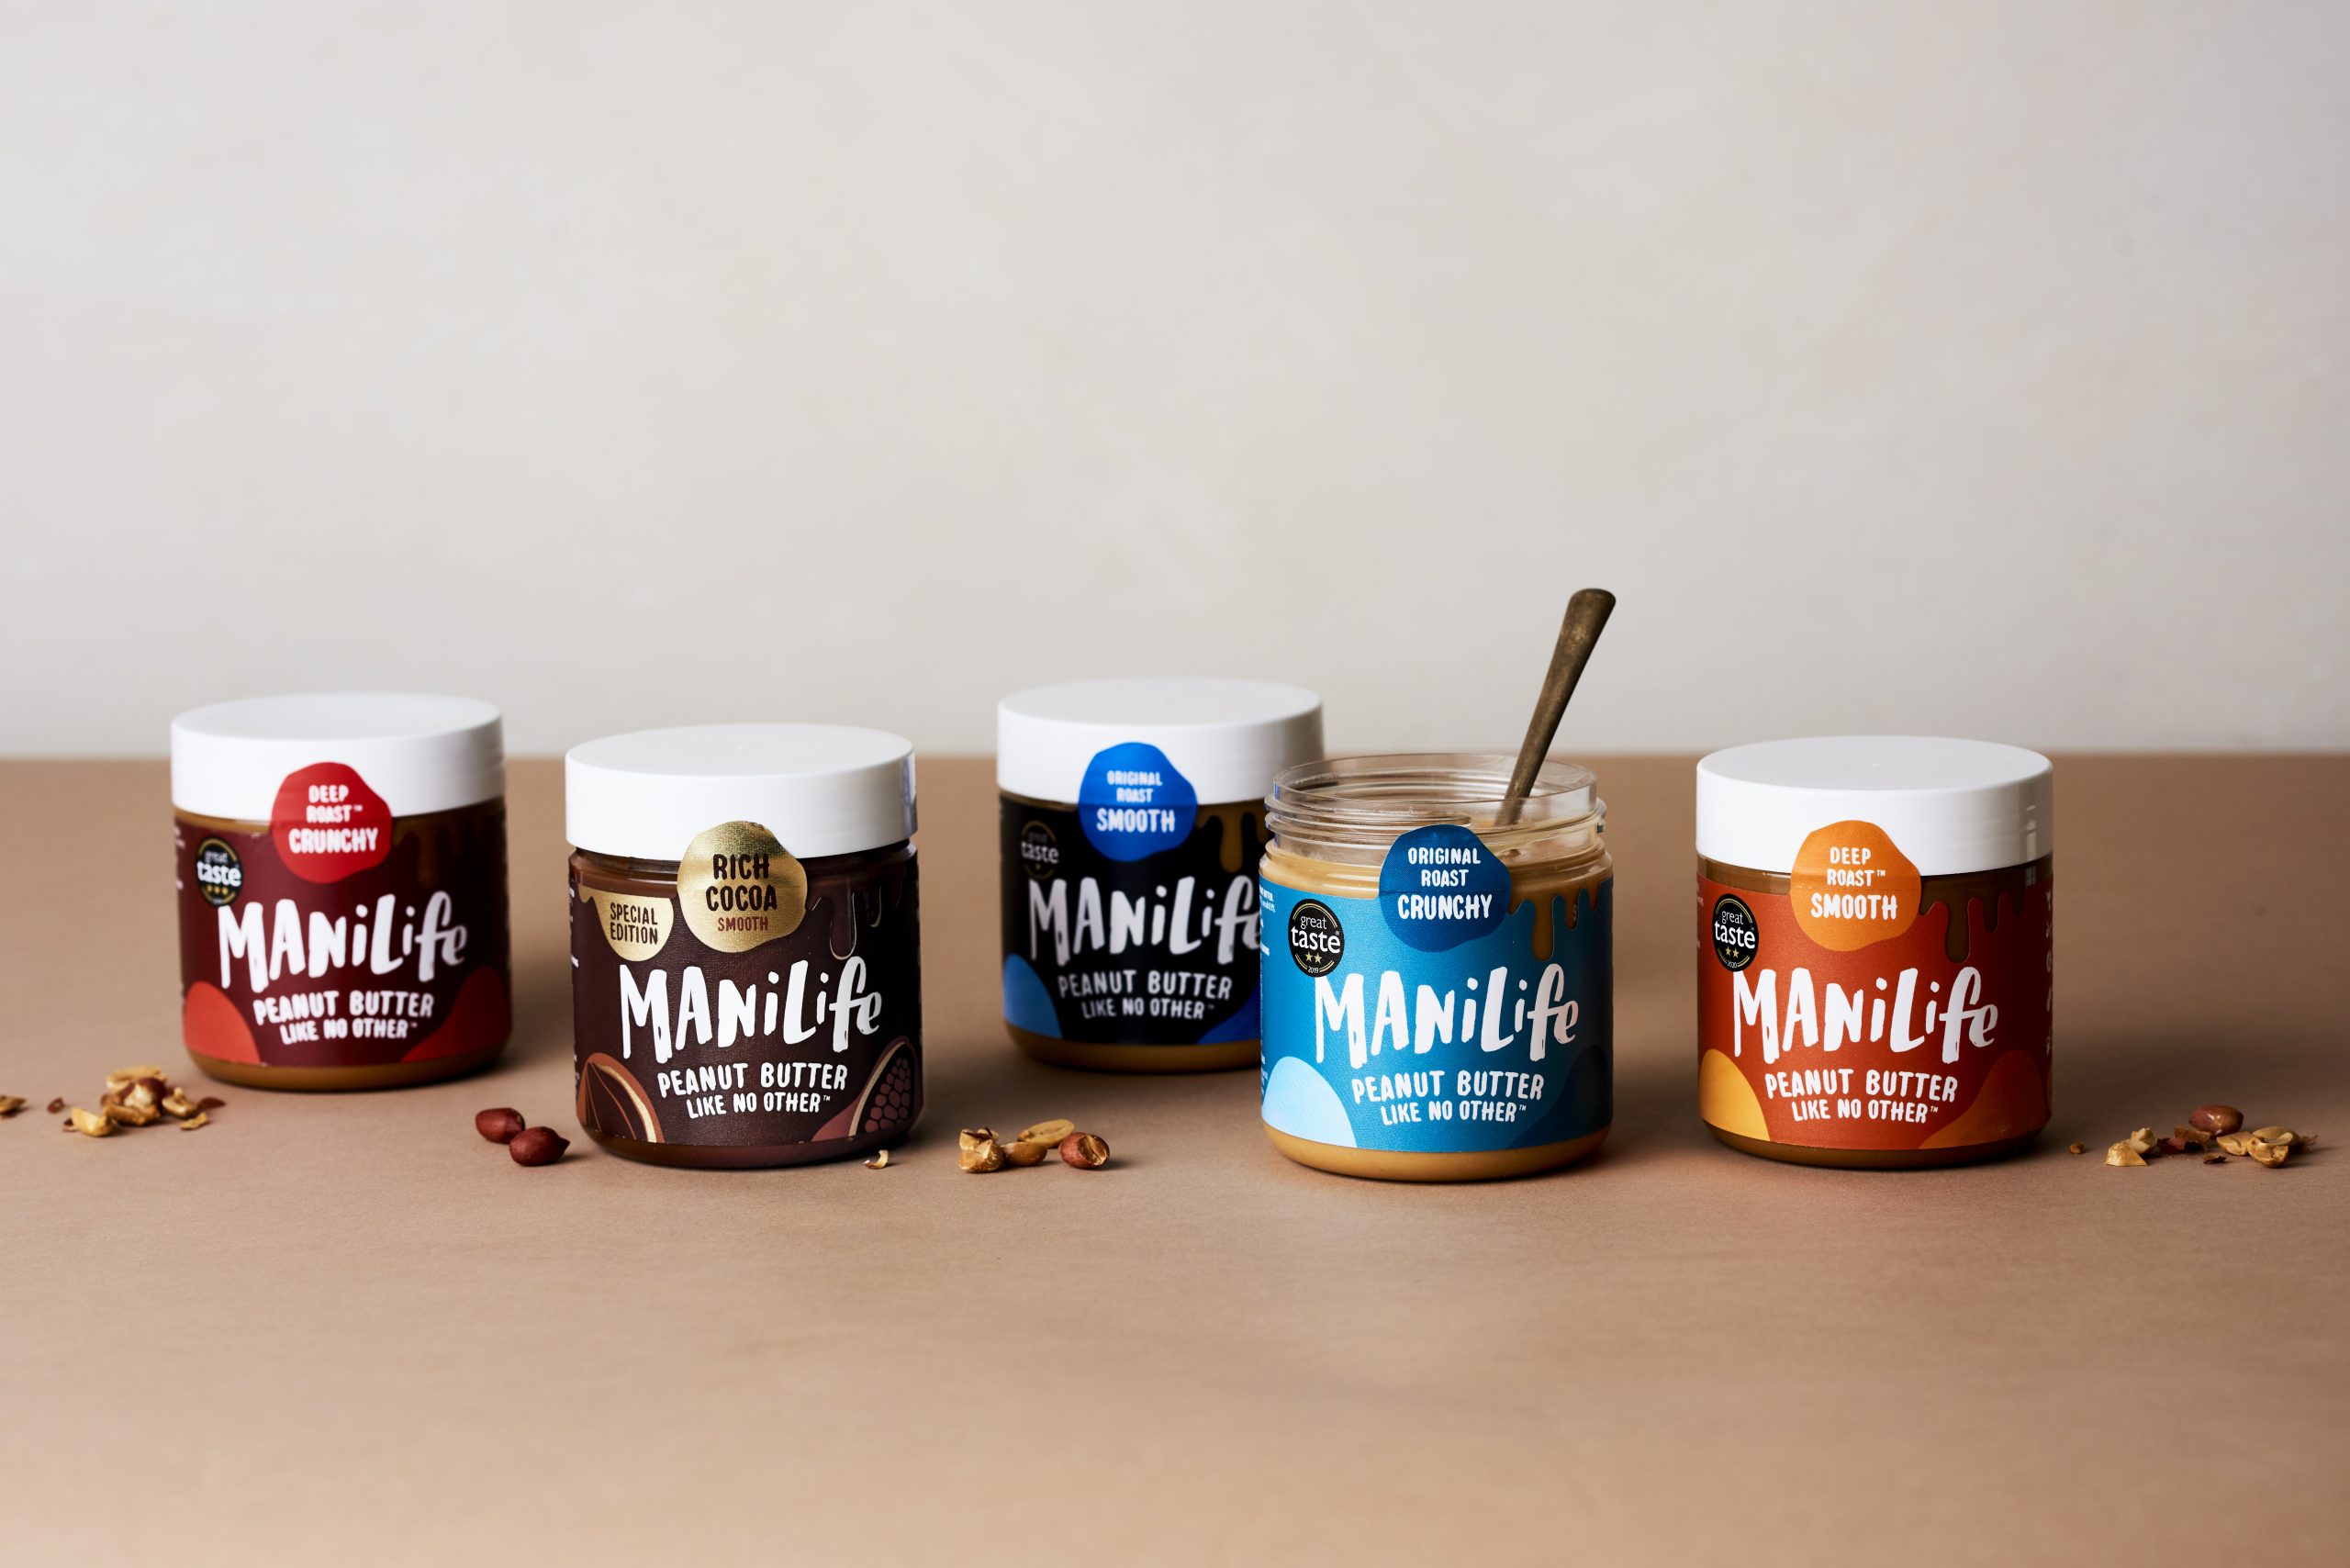 ManiLife peanut butter wins more Great Taste Awards